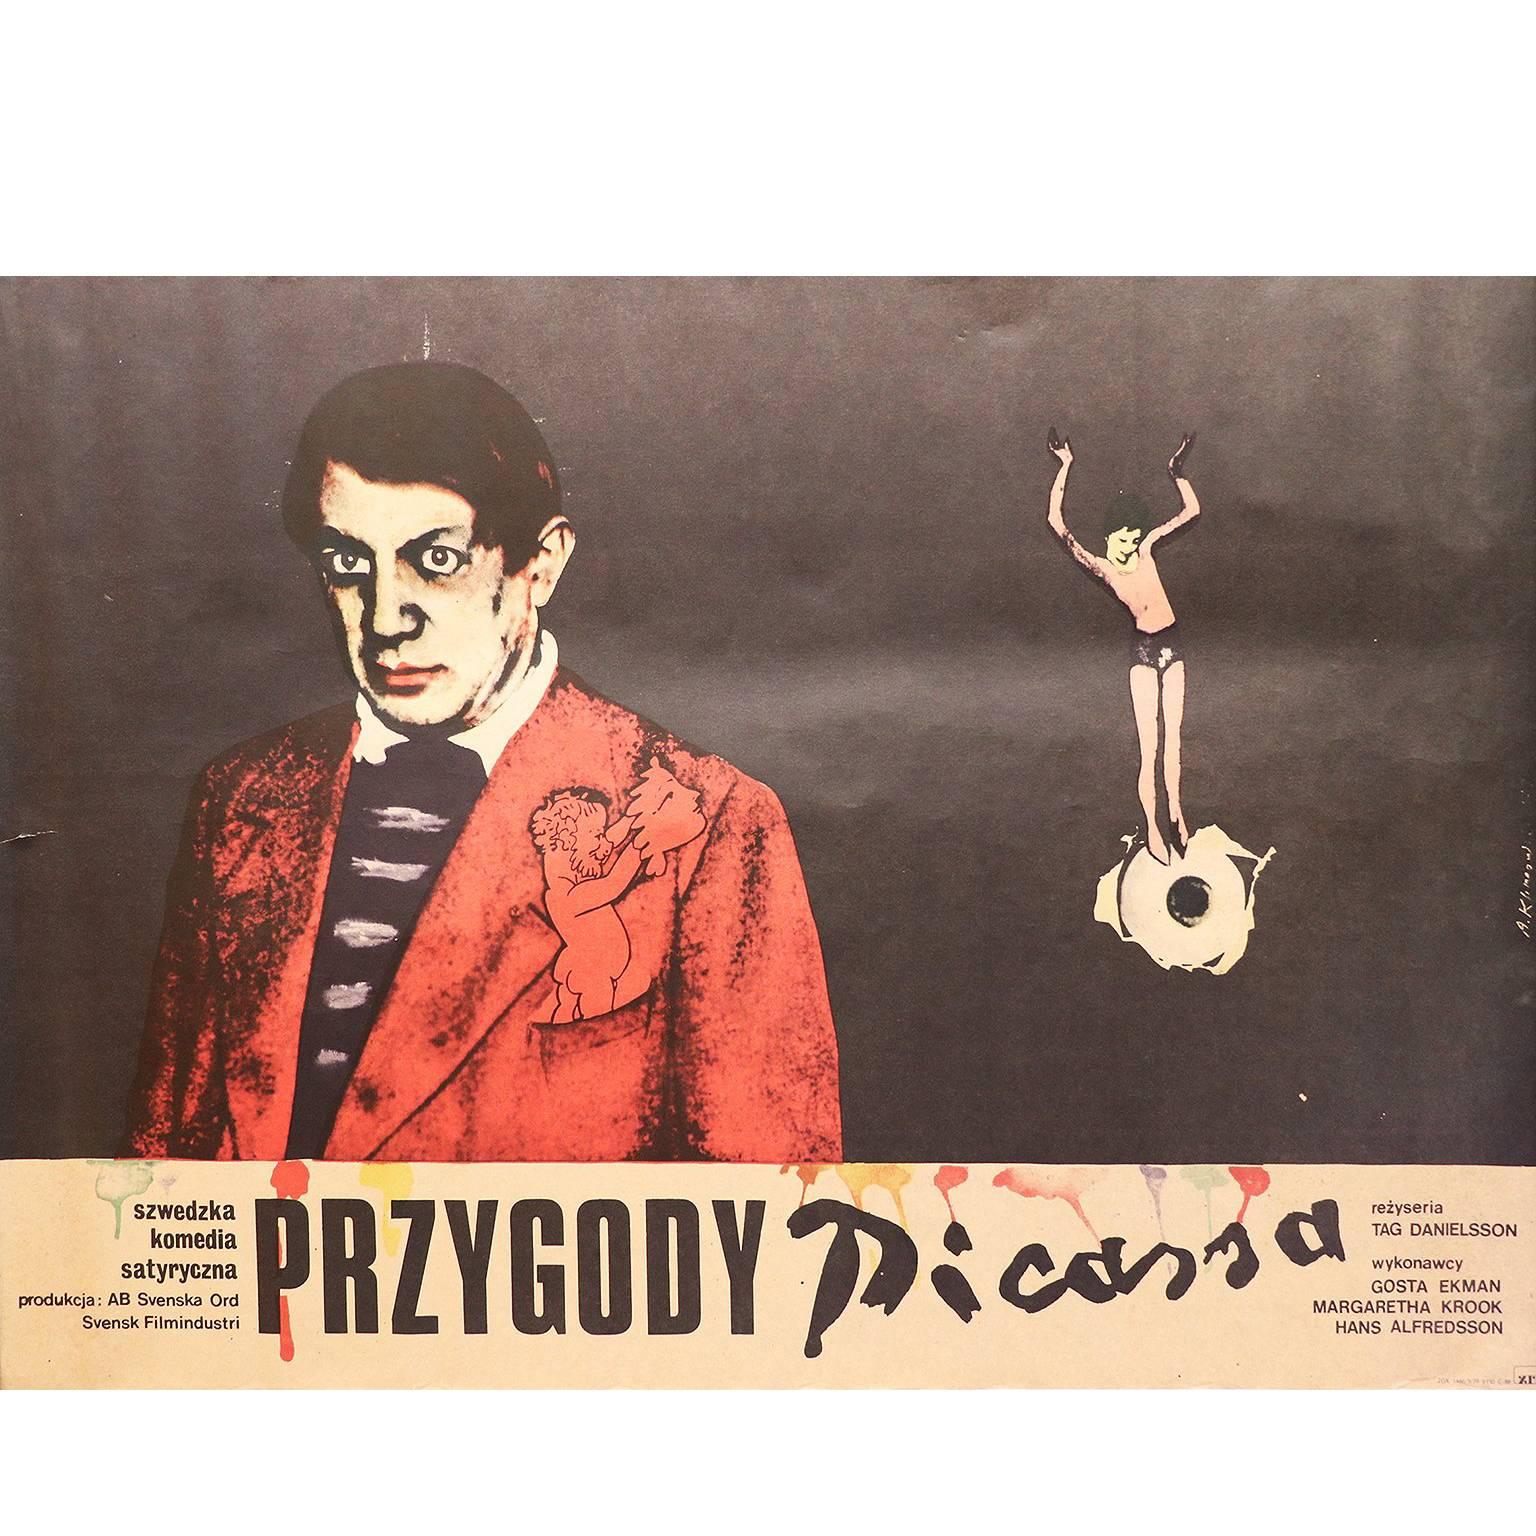 Adventures of Picasso, Original Polish Poster for the Swedish Film, 1979